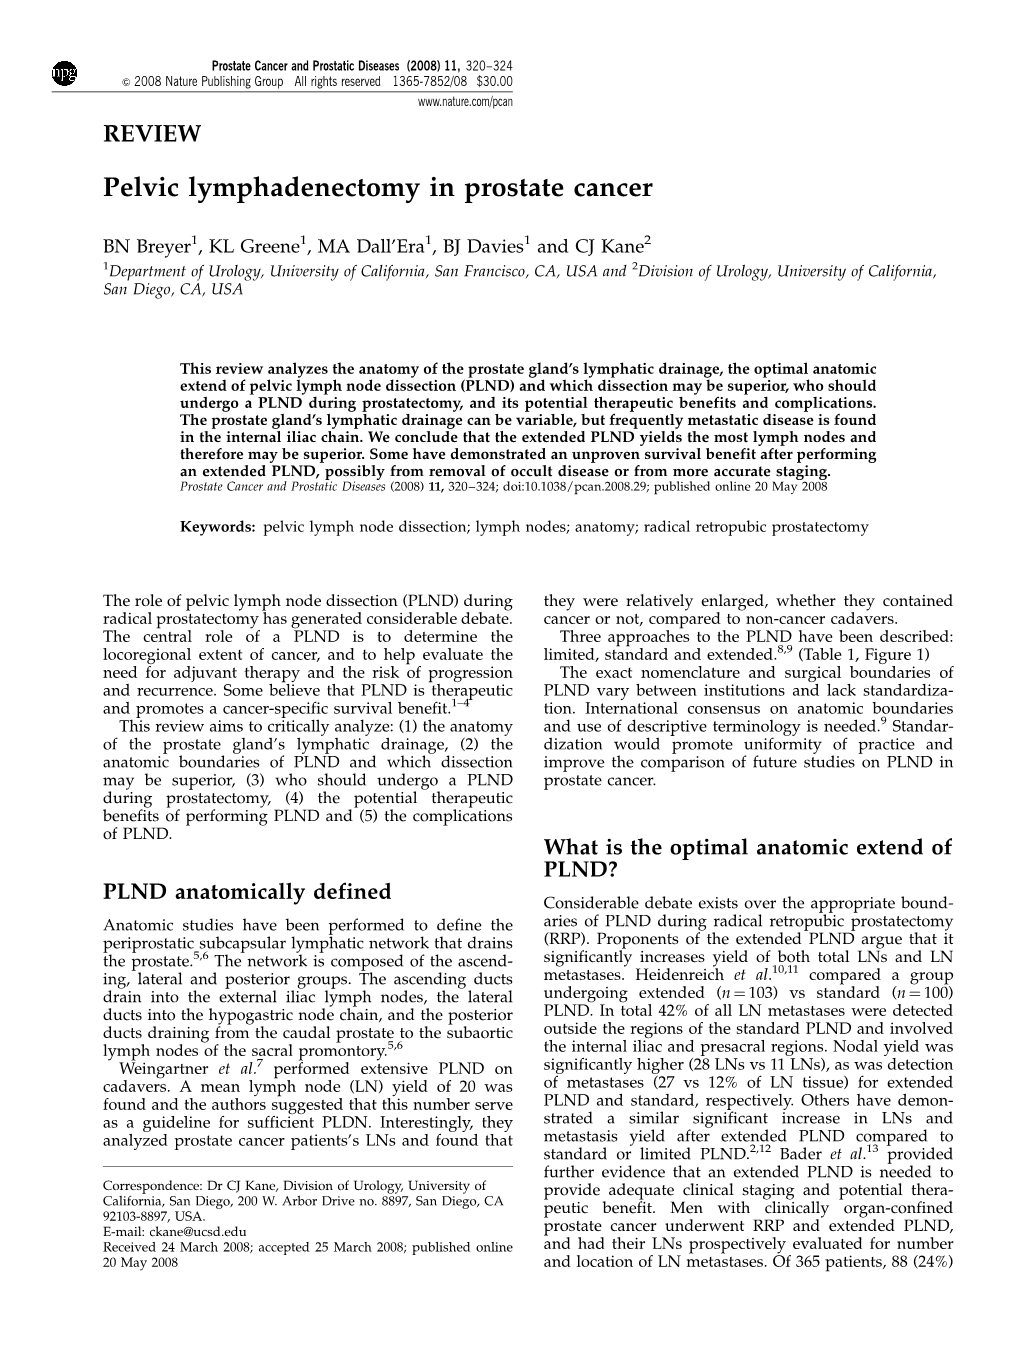 Pelvic Lymphadenectomy in Prostate Cancer